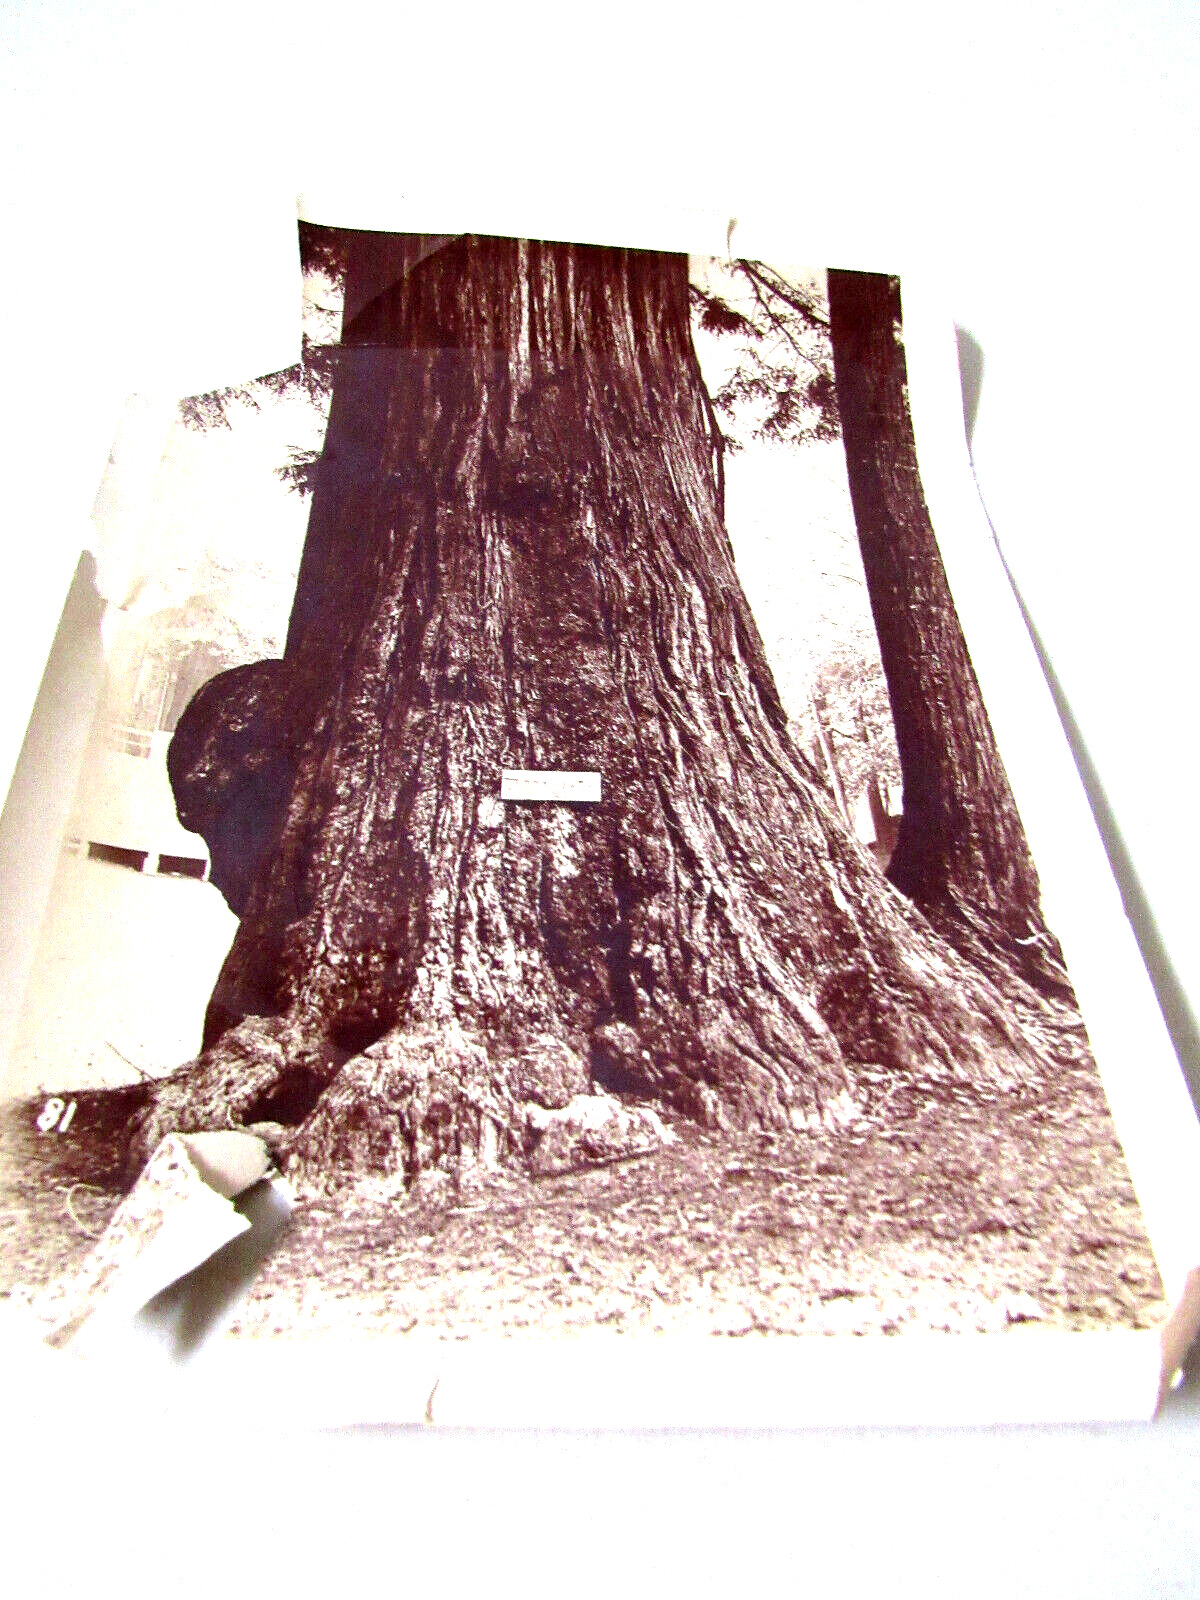 Antique C 1910s  Photo Tree named Jumbo Santa Cruz California by Akdelatte